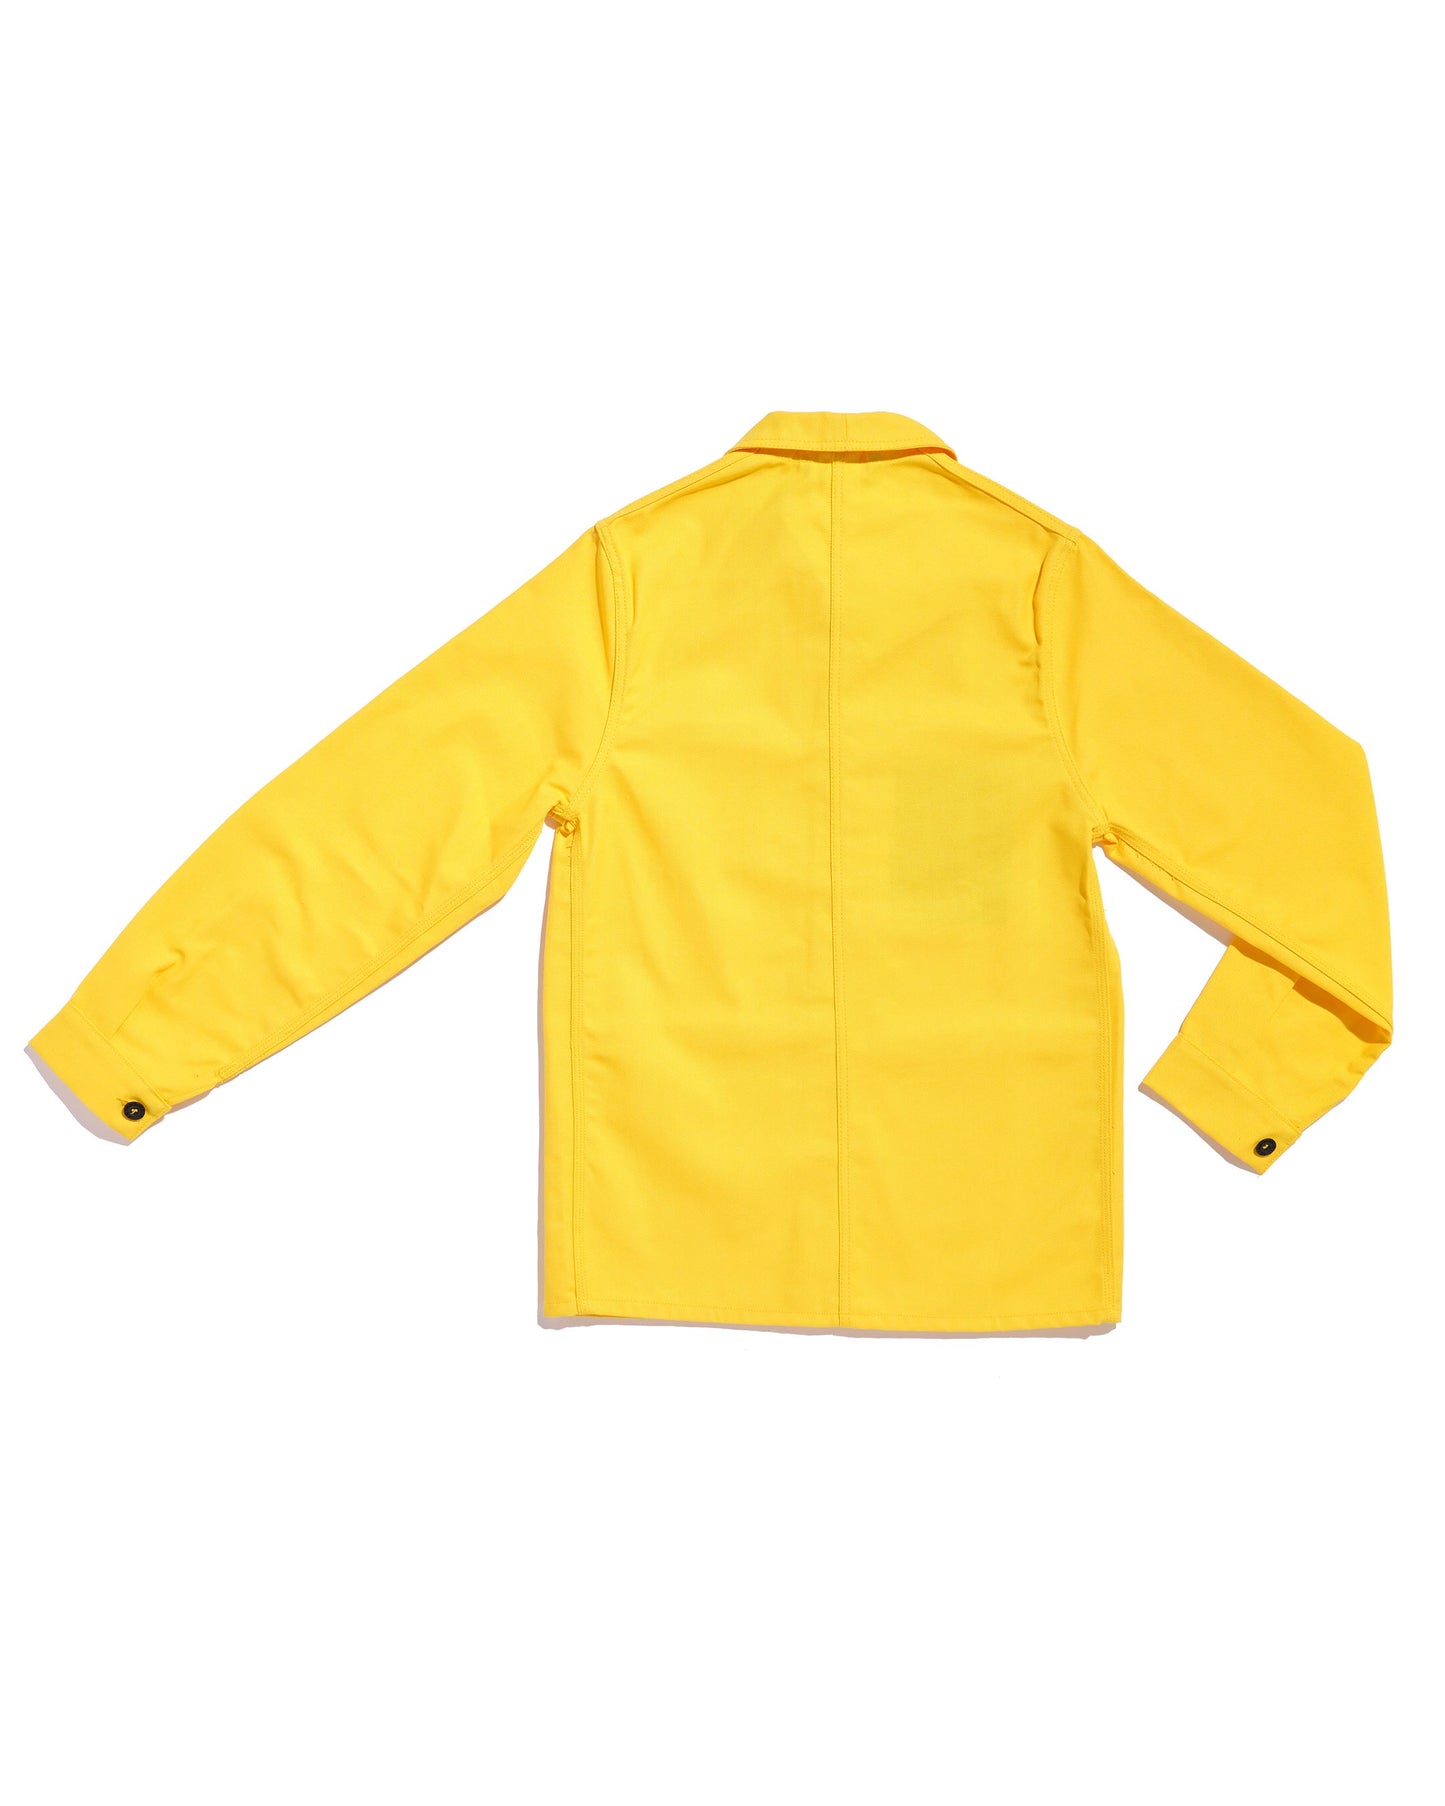 Le Laboureur lemon yellow work jacket